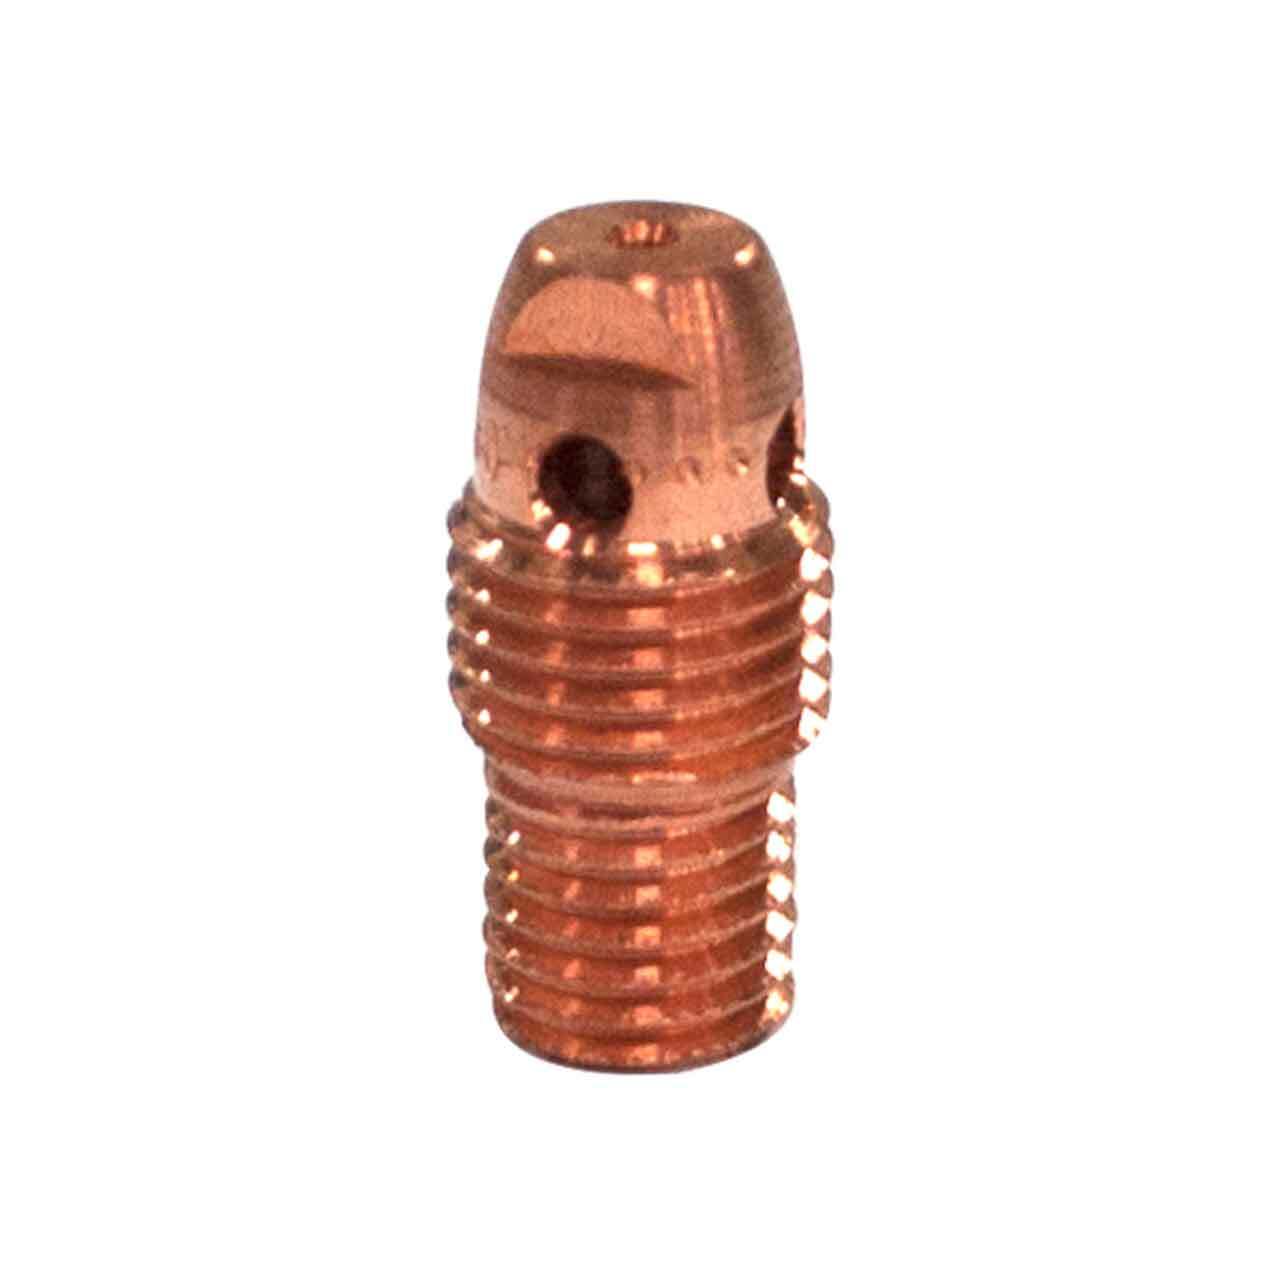 Weldmark by CK Worldwide 13N26 Copper Collet Body 1/25 (0.040) Max Electrode Diameter